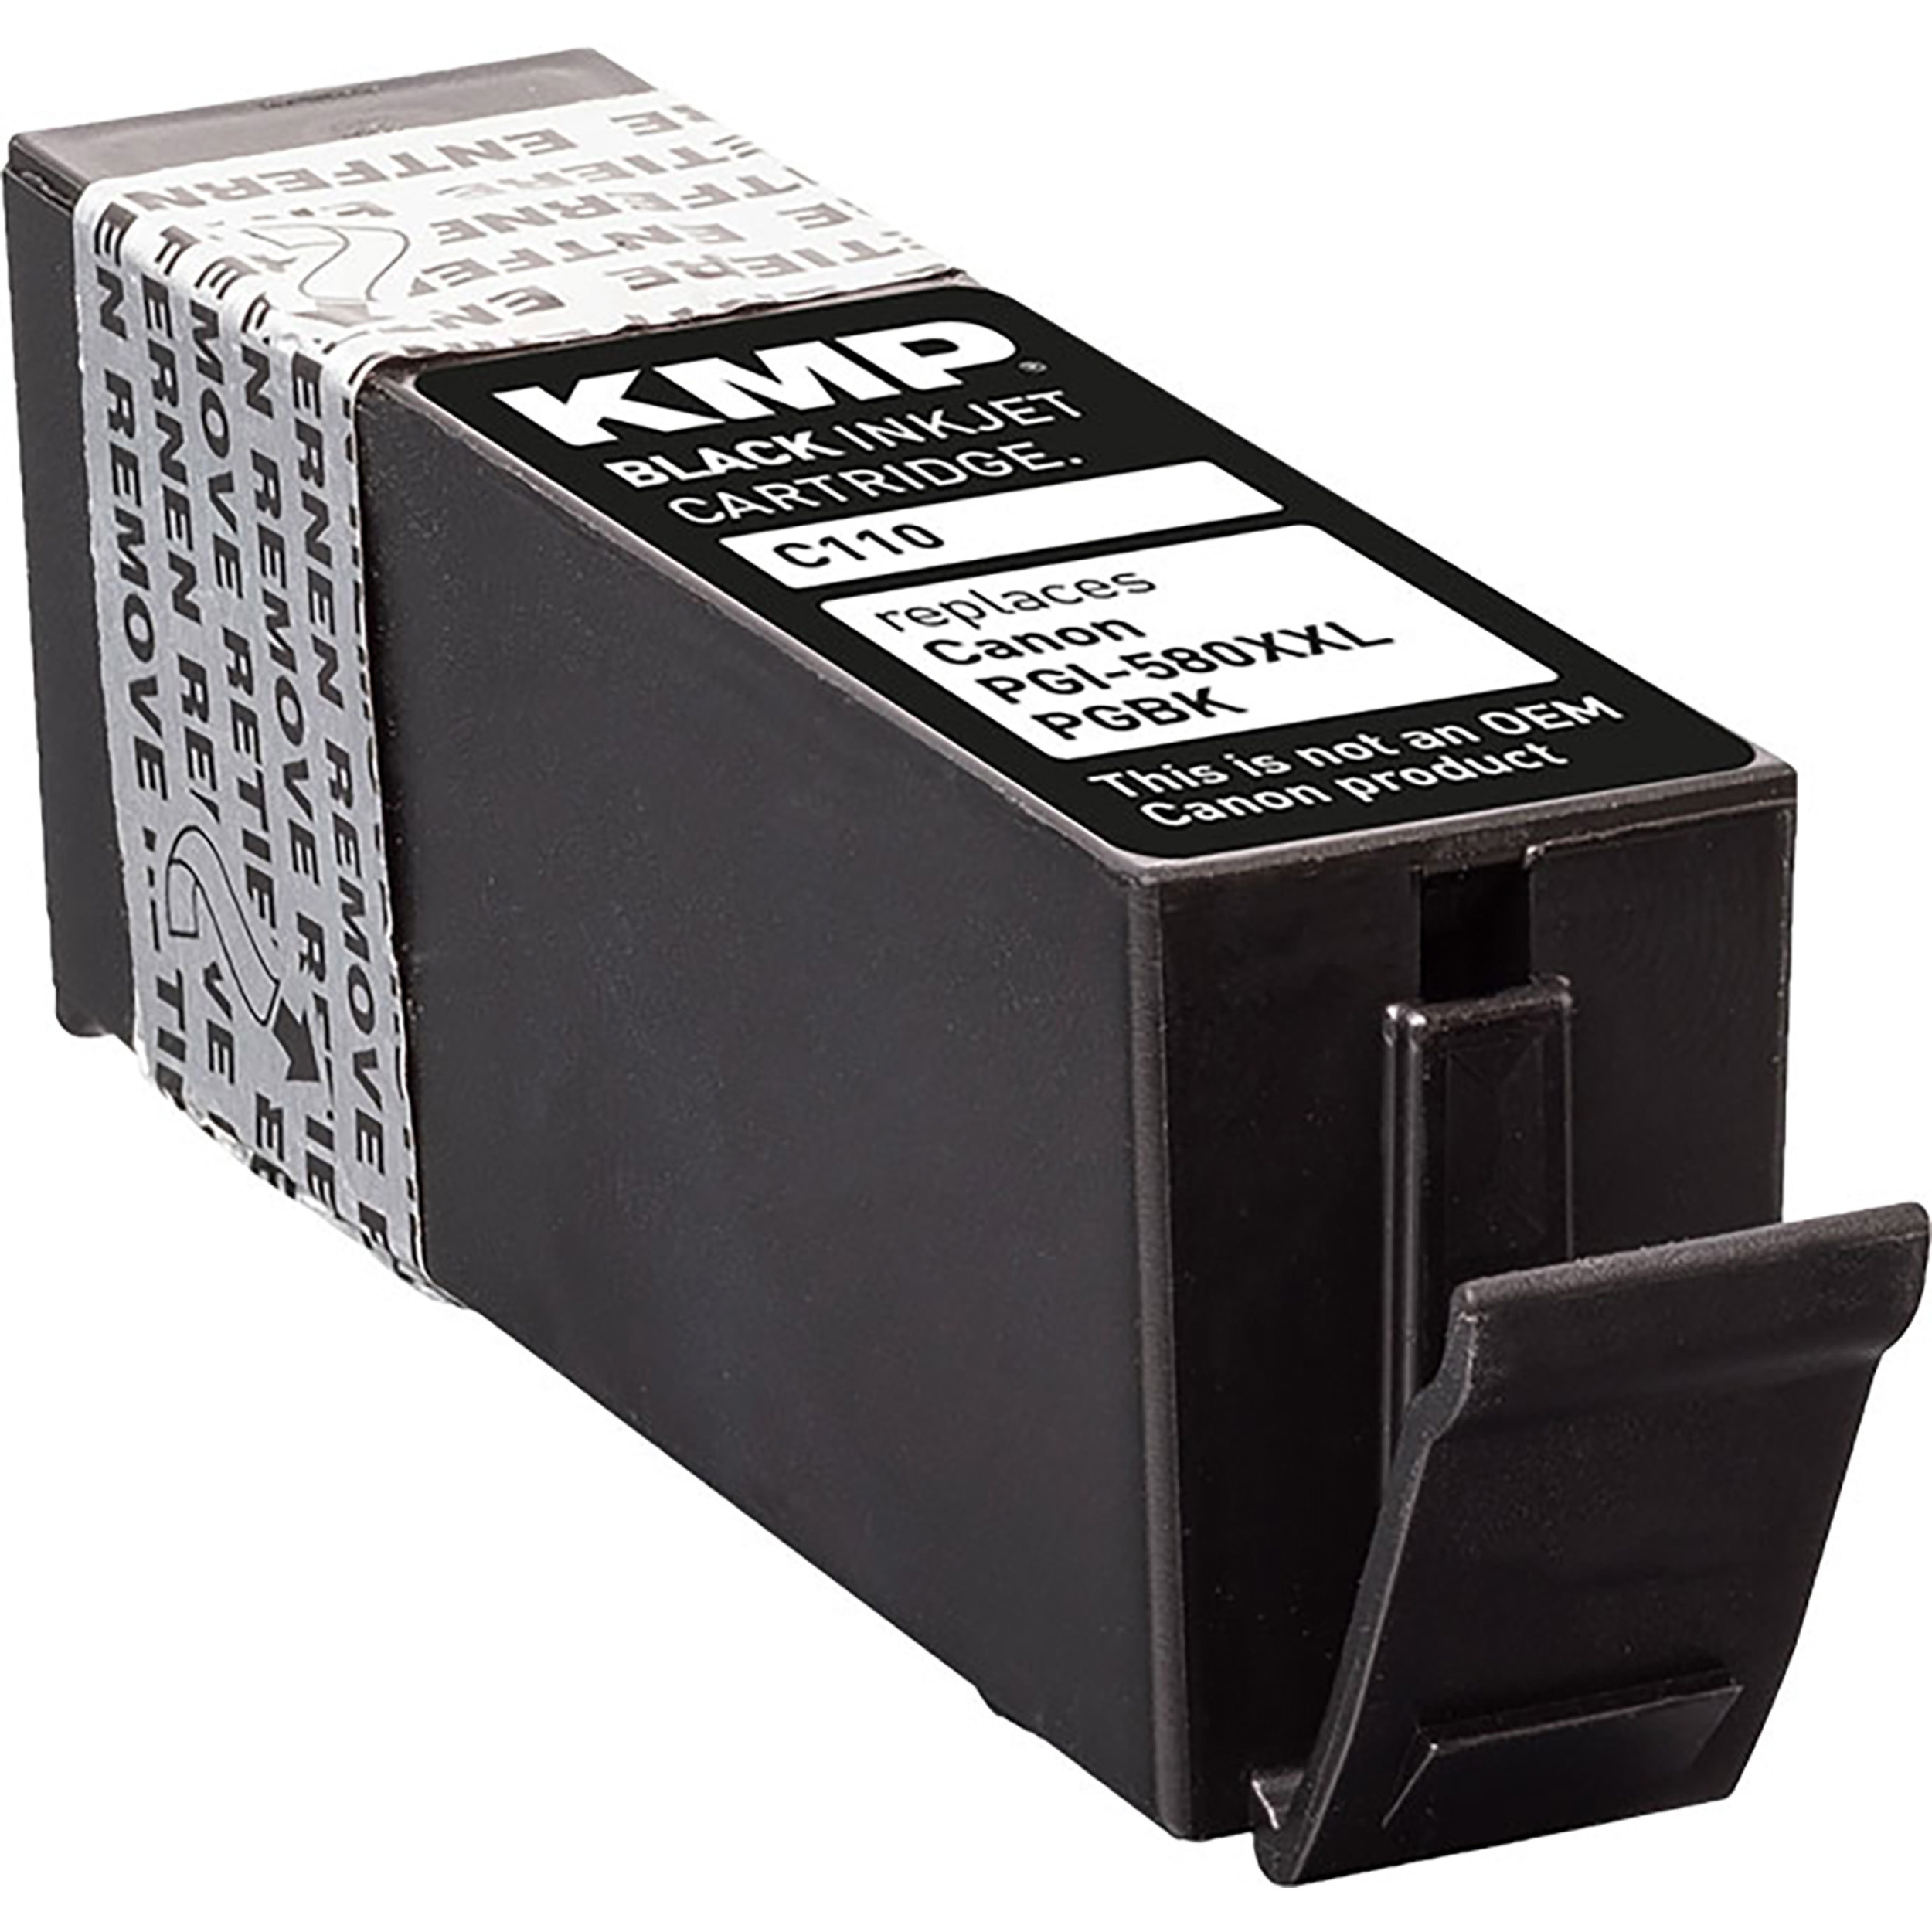 KMP Tintenpatrone für Canon (1970C001) (1970C001) Ink black Cartridge 580PGBKXXL Black